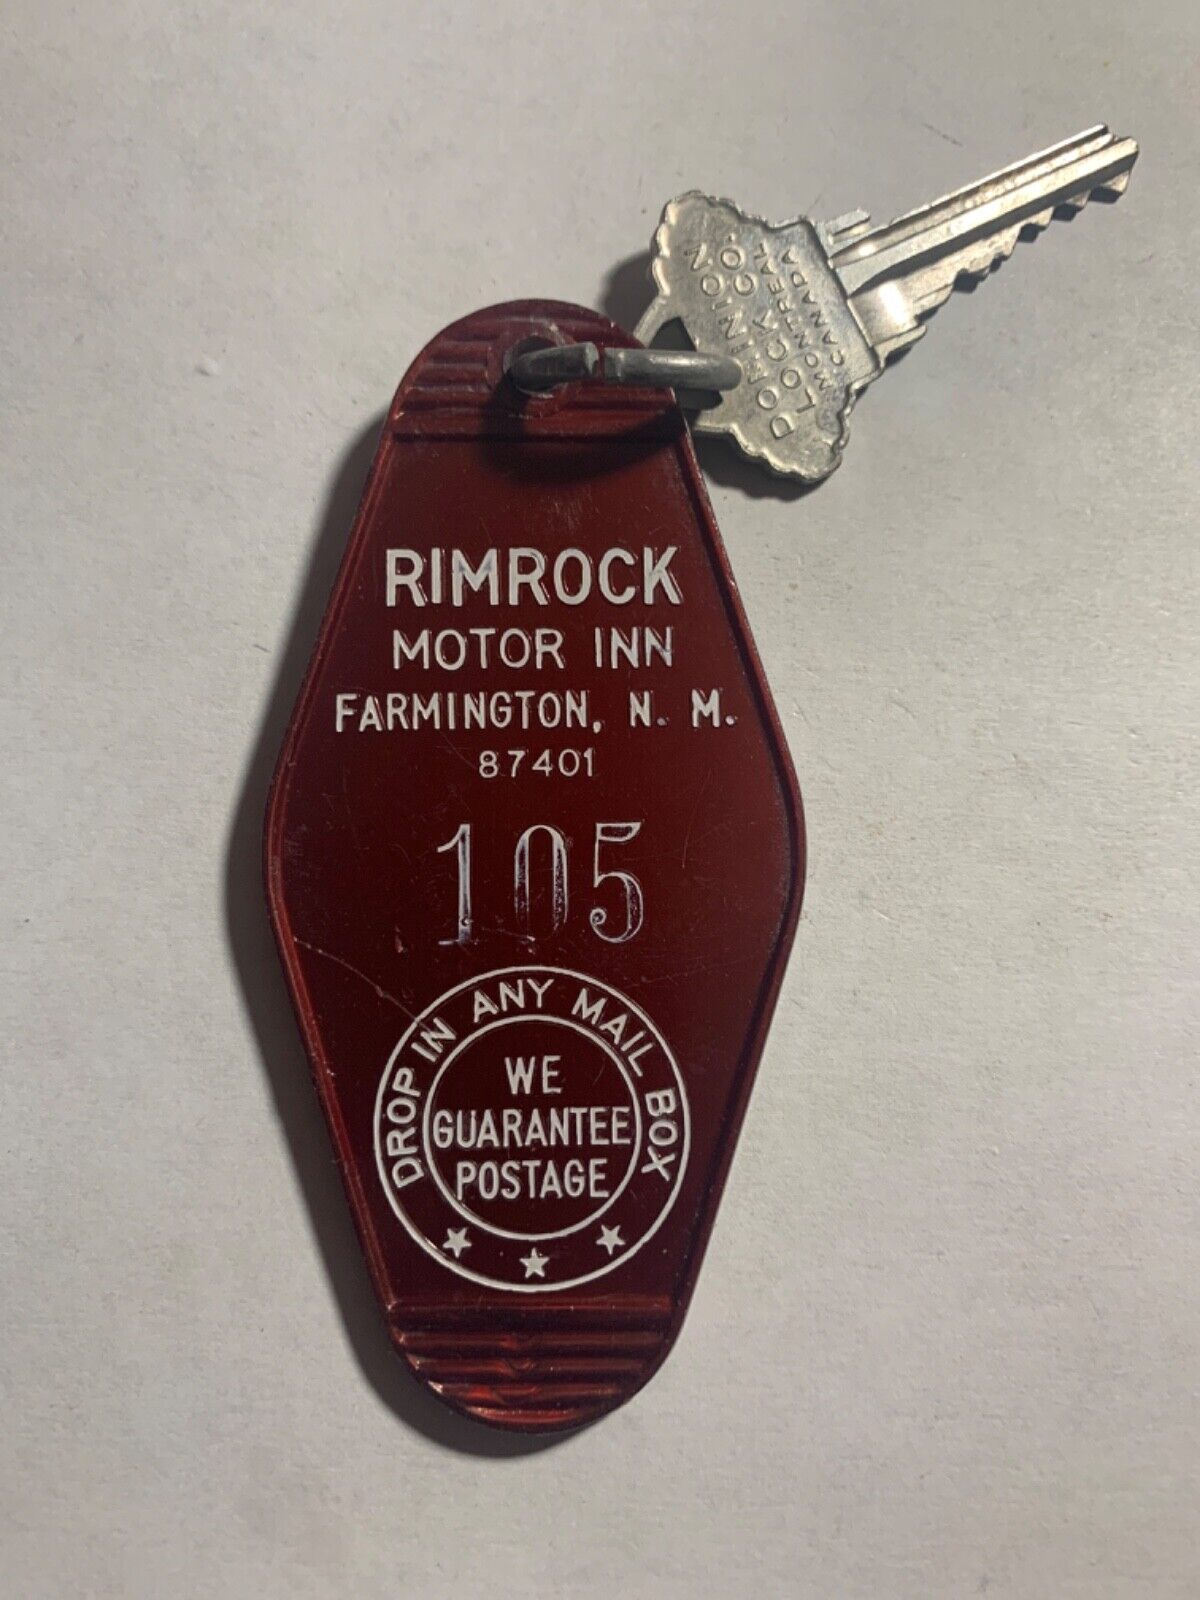 Rimrock Motor Inn Hotel Motel Room Key Fob & Key Farmington New Mexico #105 RARE